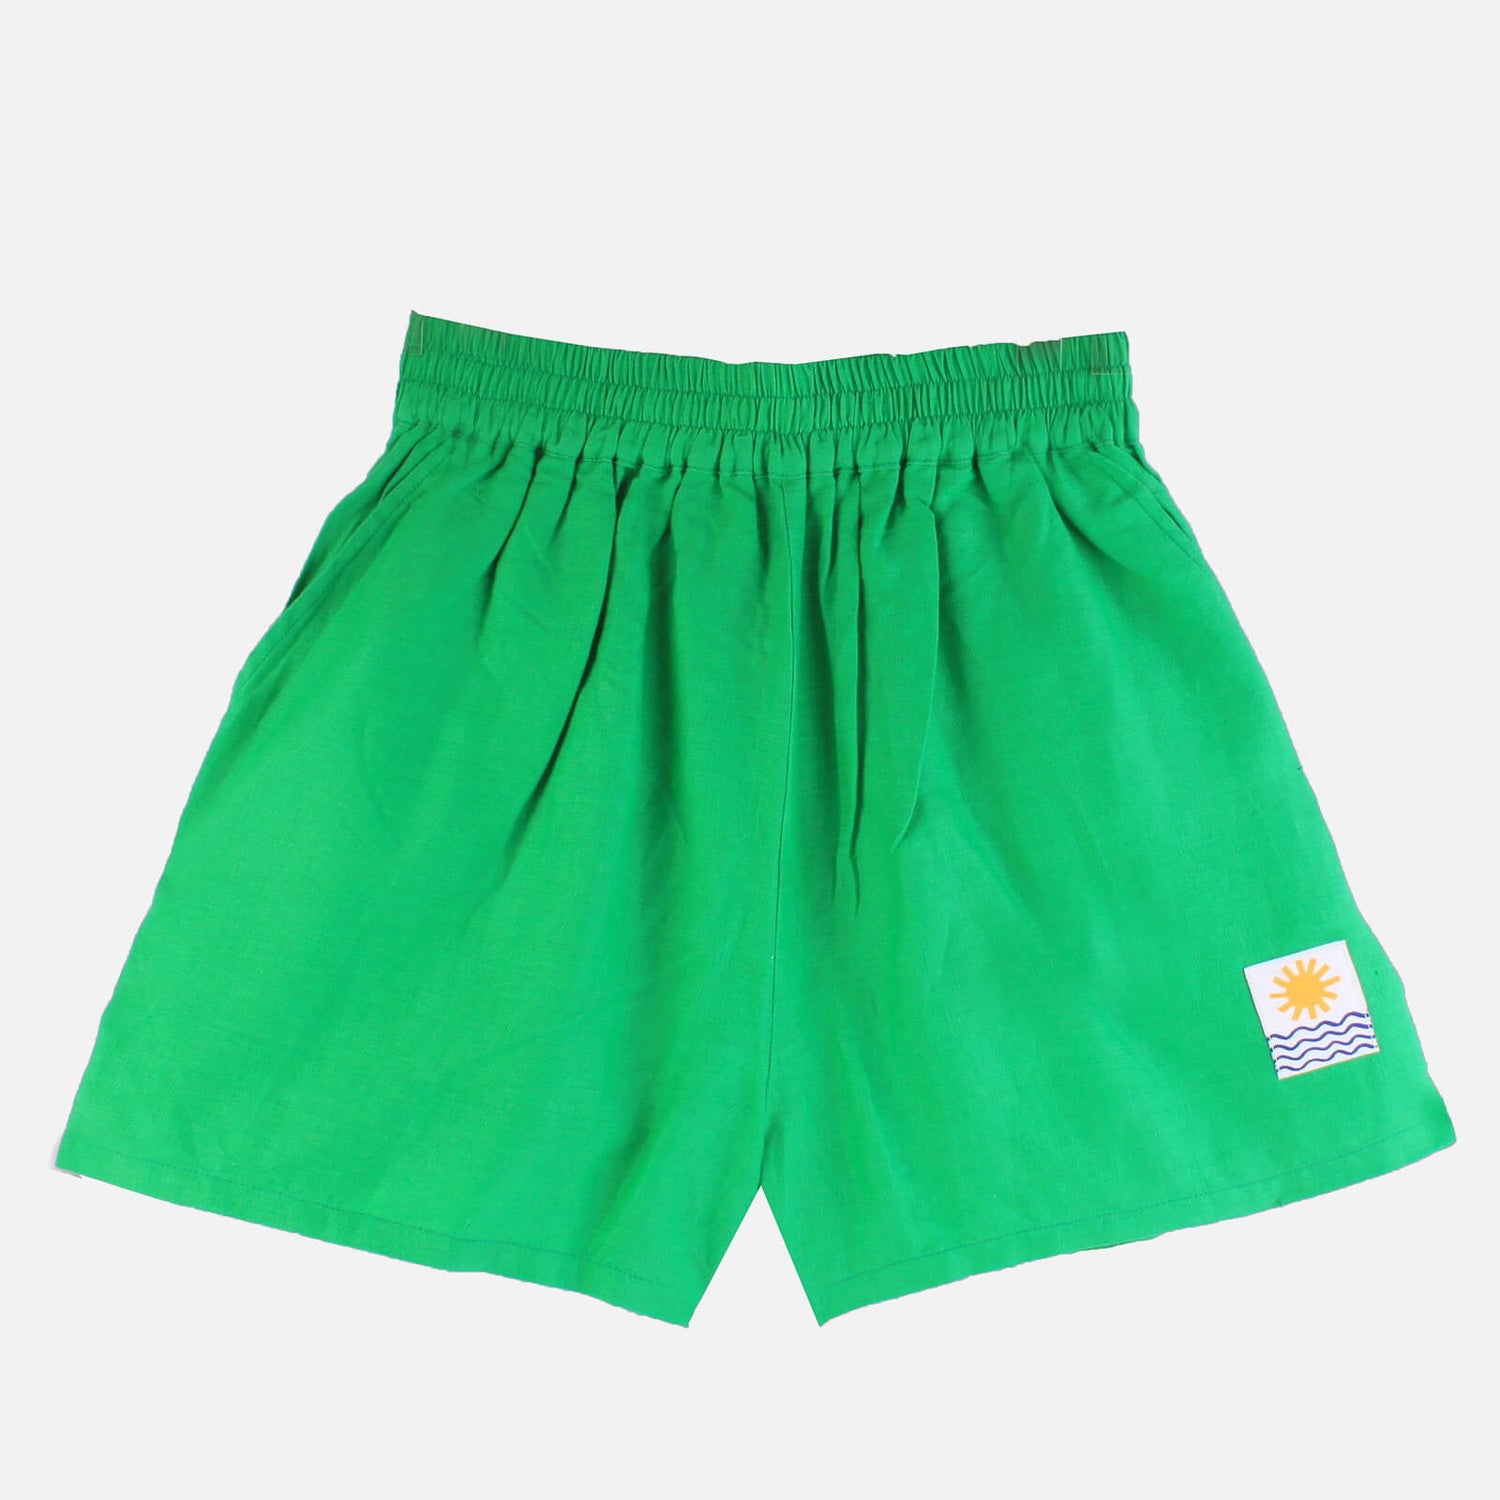 L.F Markey Women's Basic Linen Shorts - Green - UK 6